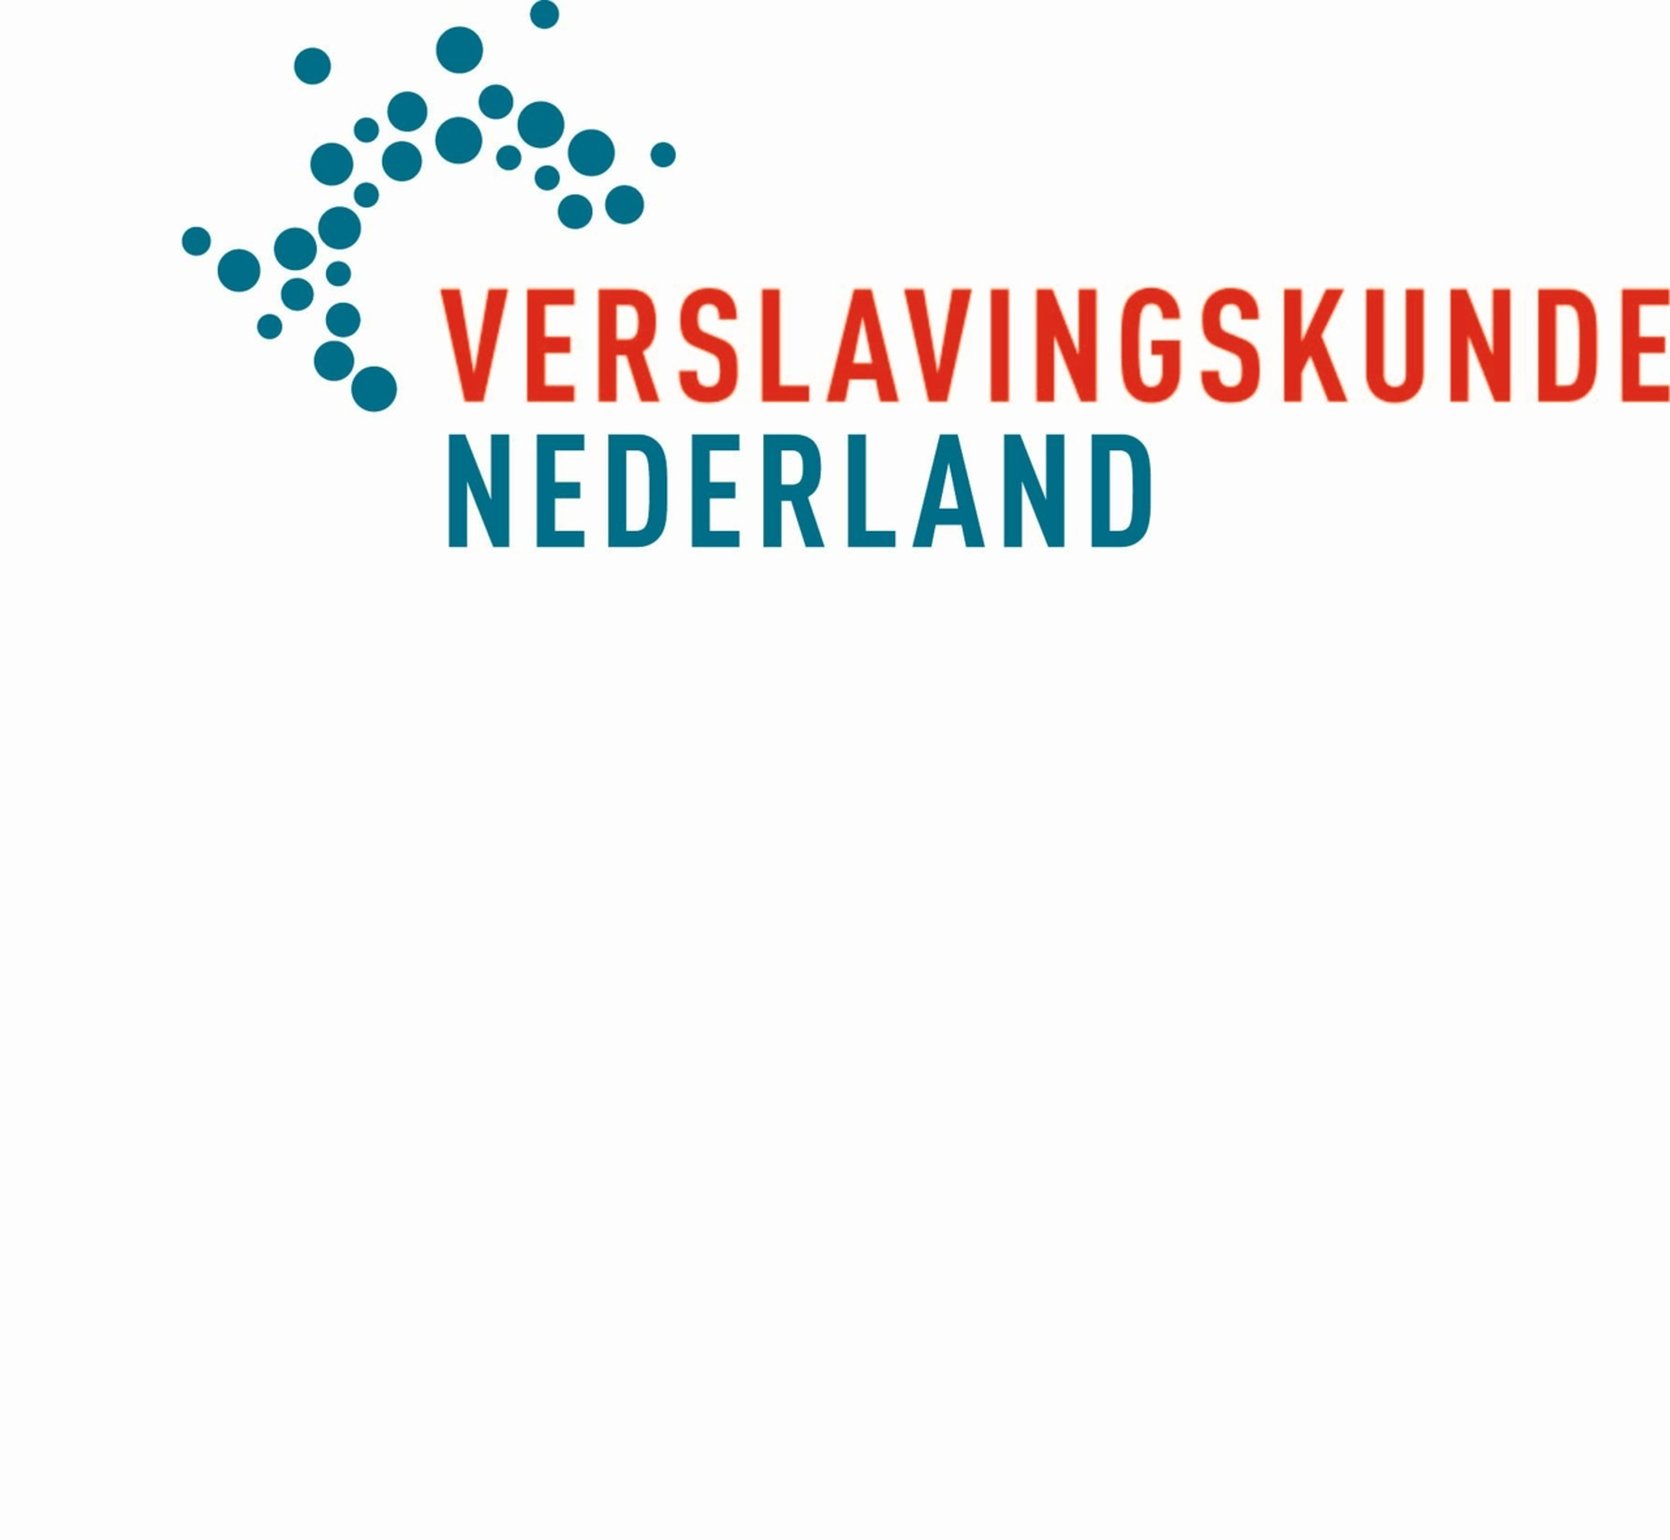 Verslavingskunde Nederland bundelt expertise